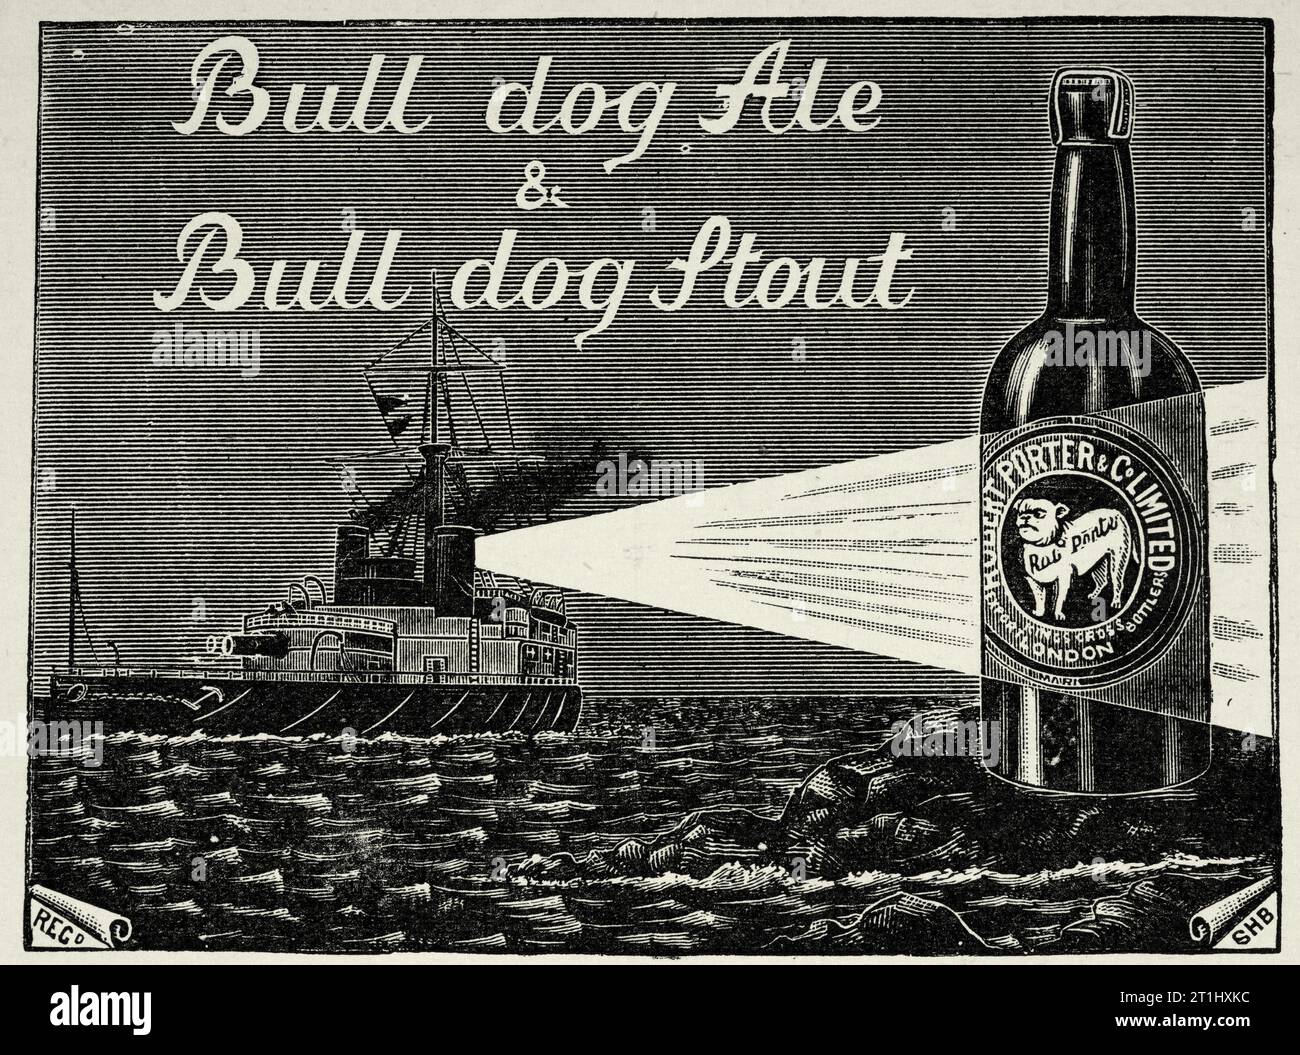 Vintage advert of Bull dog ale amd stout, Victorian beer advert, 1890s, 19th Century. Battleship, Royal navy searchlight Stock Photo